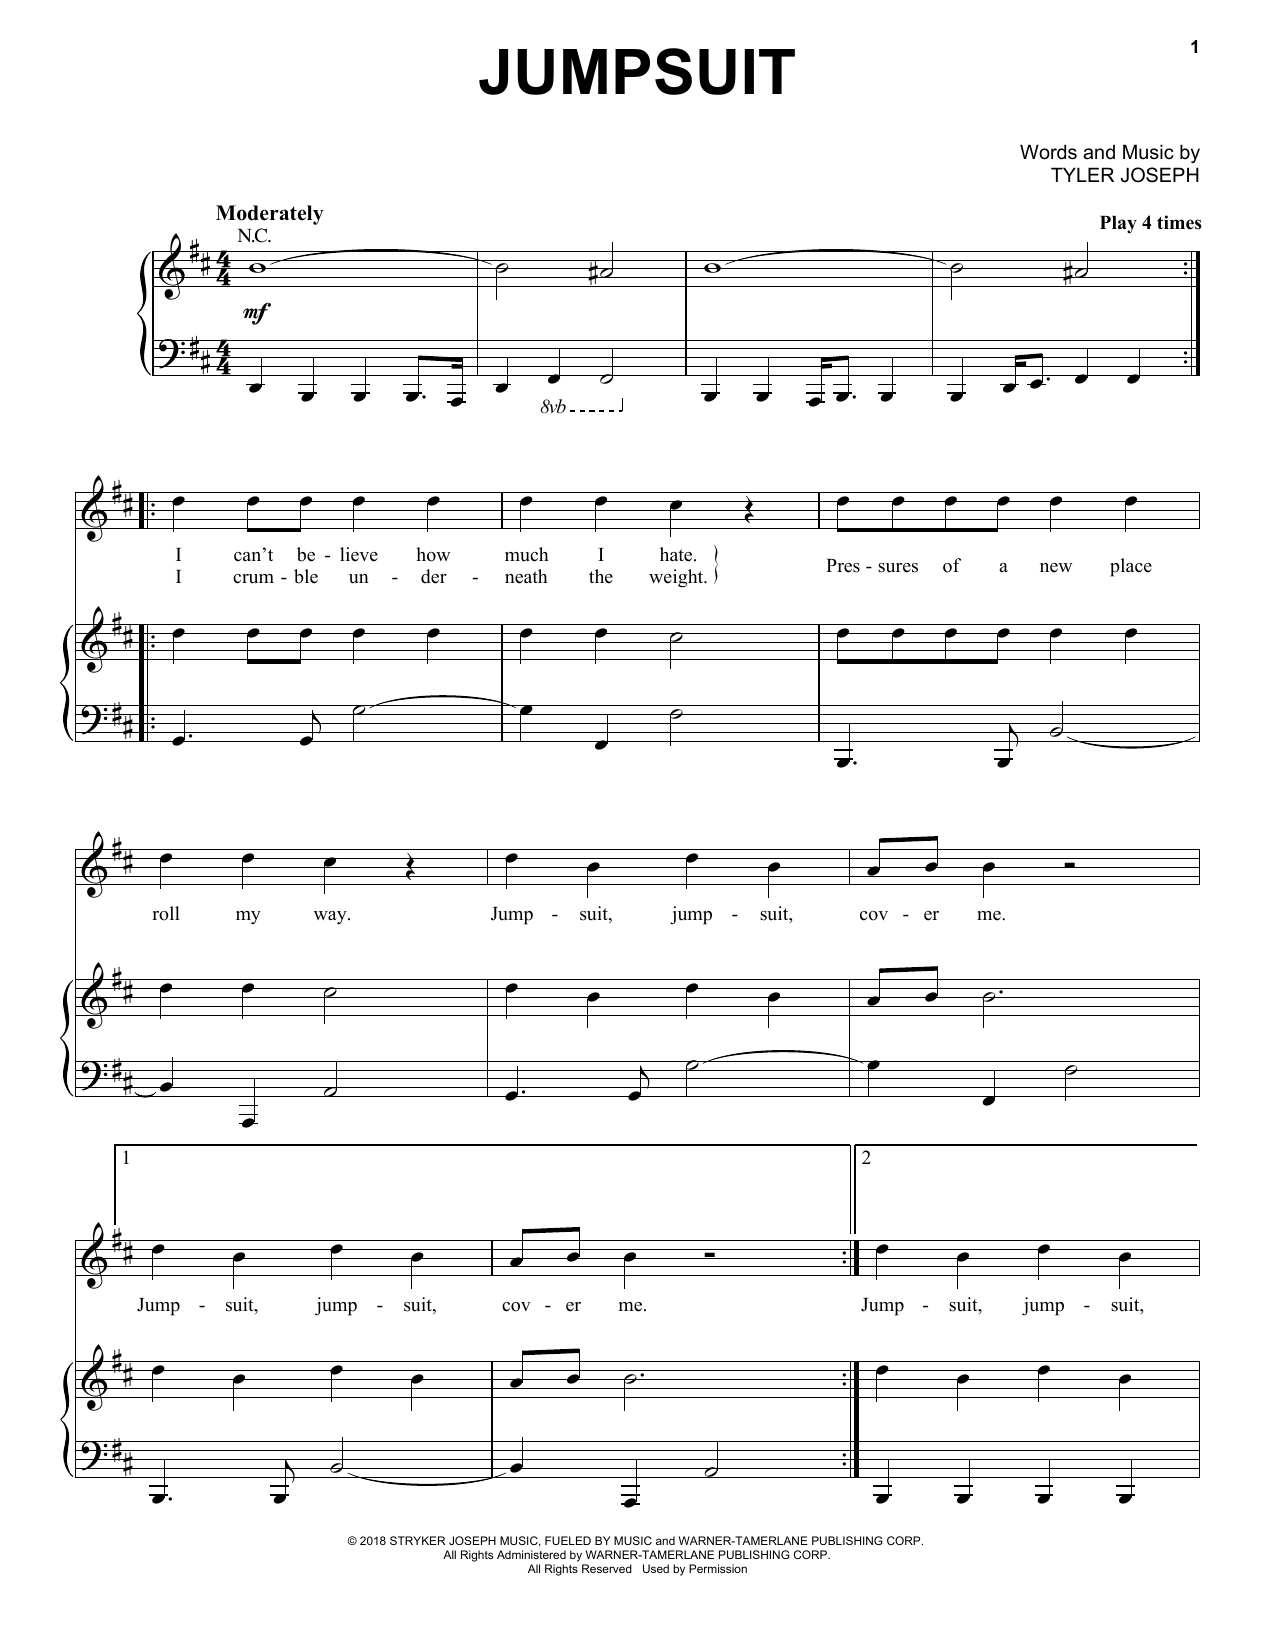 diamant Visne At passe twenty one pilots "Jumpsuit" Sheet Music PDF Notes, Chords | Pop Score  Piano & Vocal Download Printable. SKU: 254866